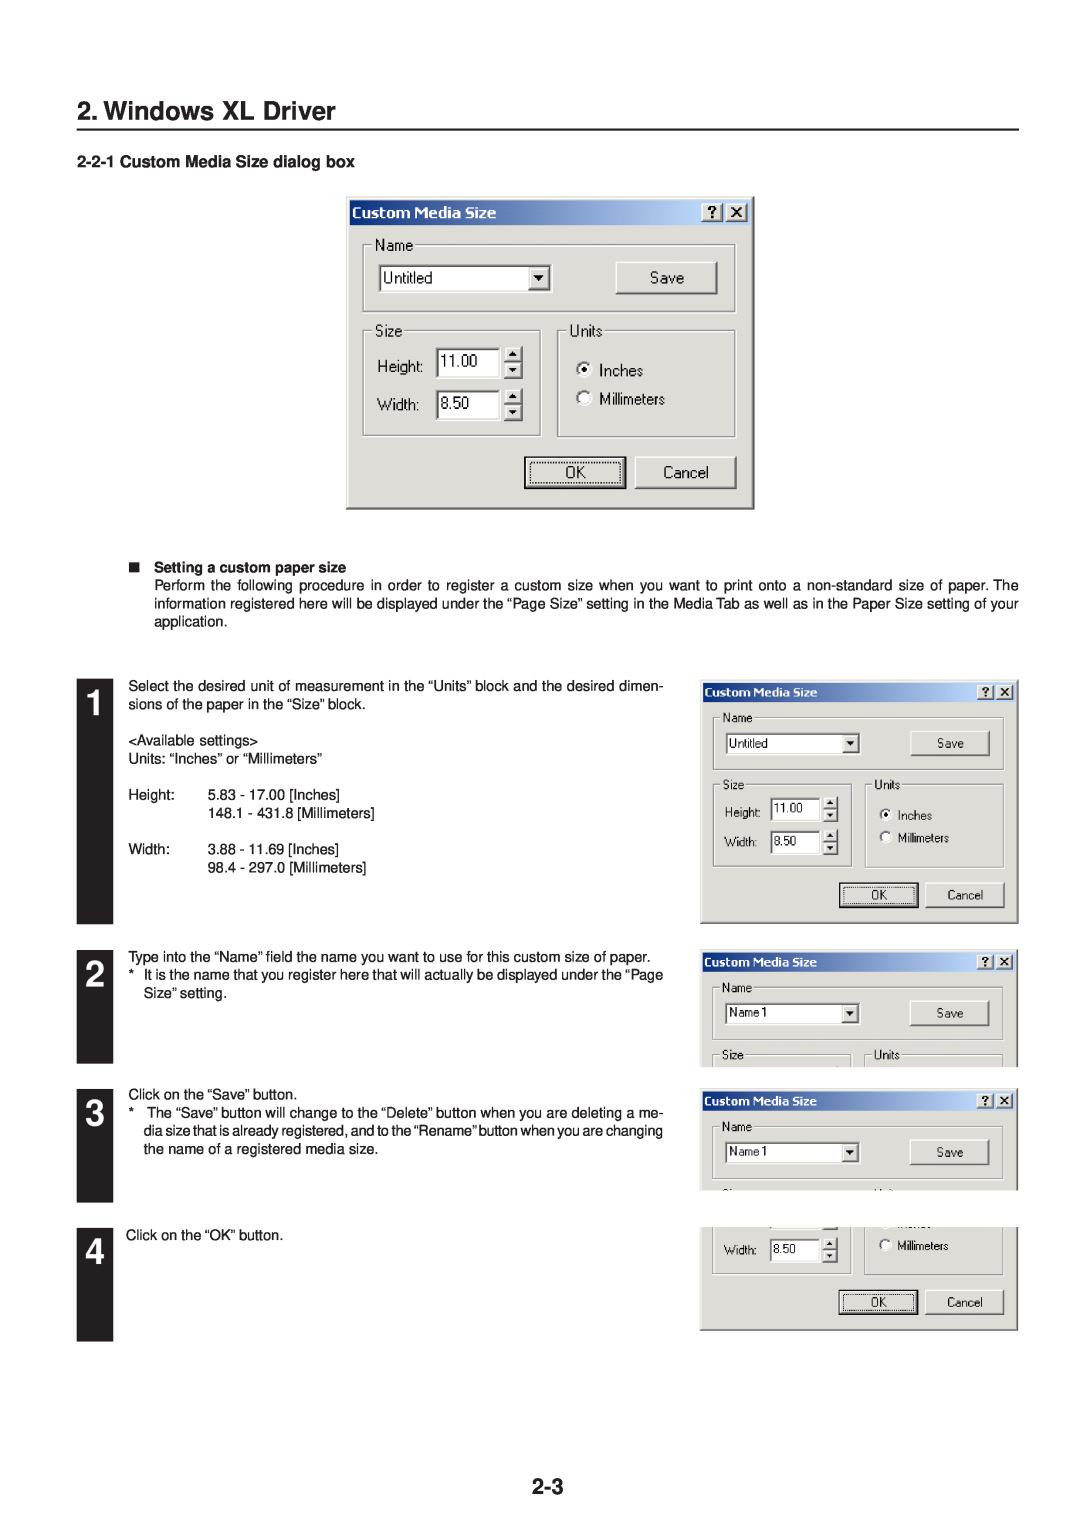 IBM Printing System manual Windows XL Driver, Custom Media Size dialog box, Setting a custom paper size 